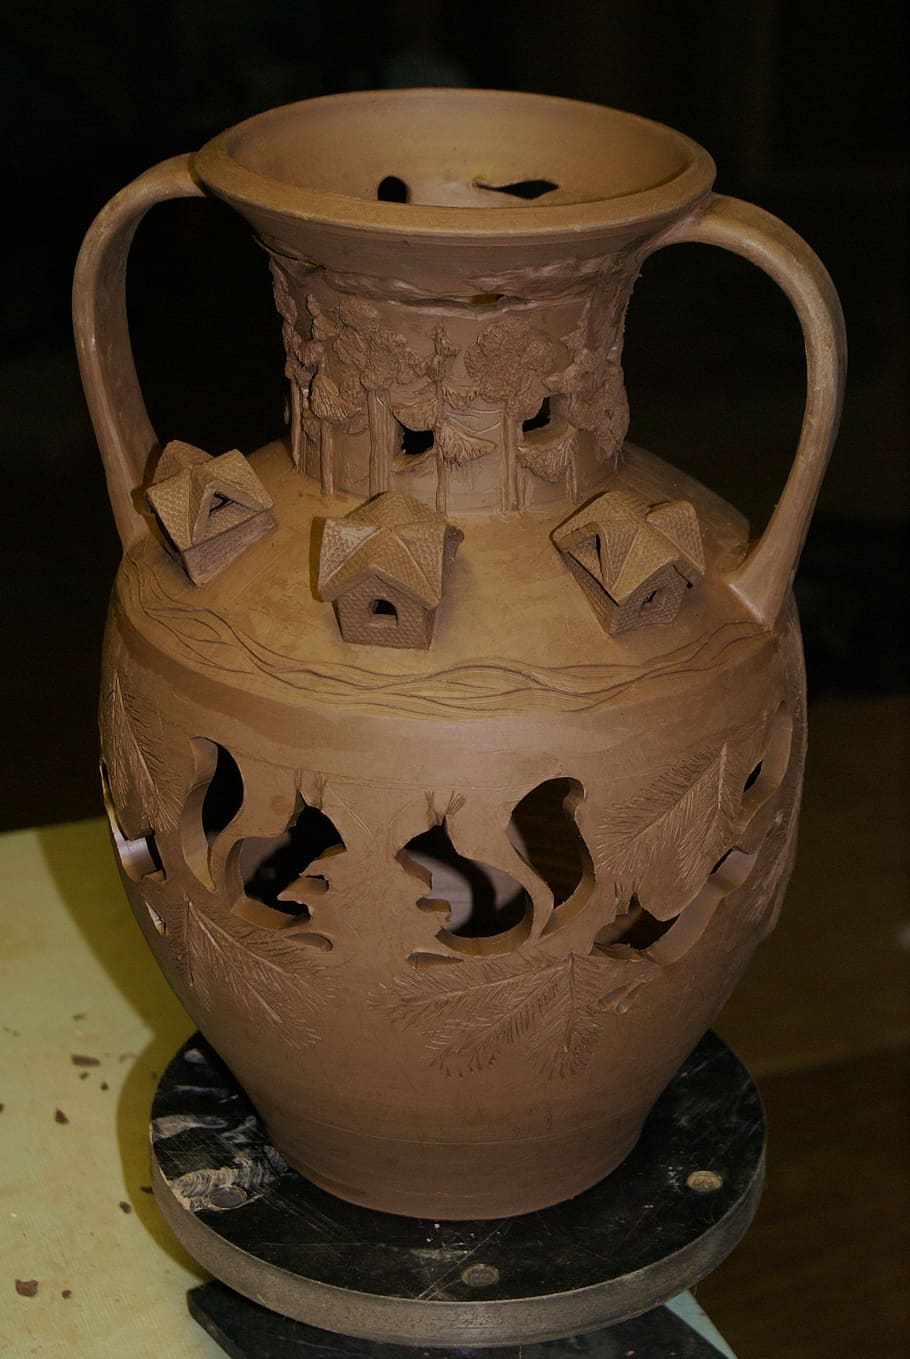 ceramics, clay, pitcher, jug, pottery, cultures, earthenware, craft, vase, indoors